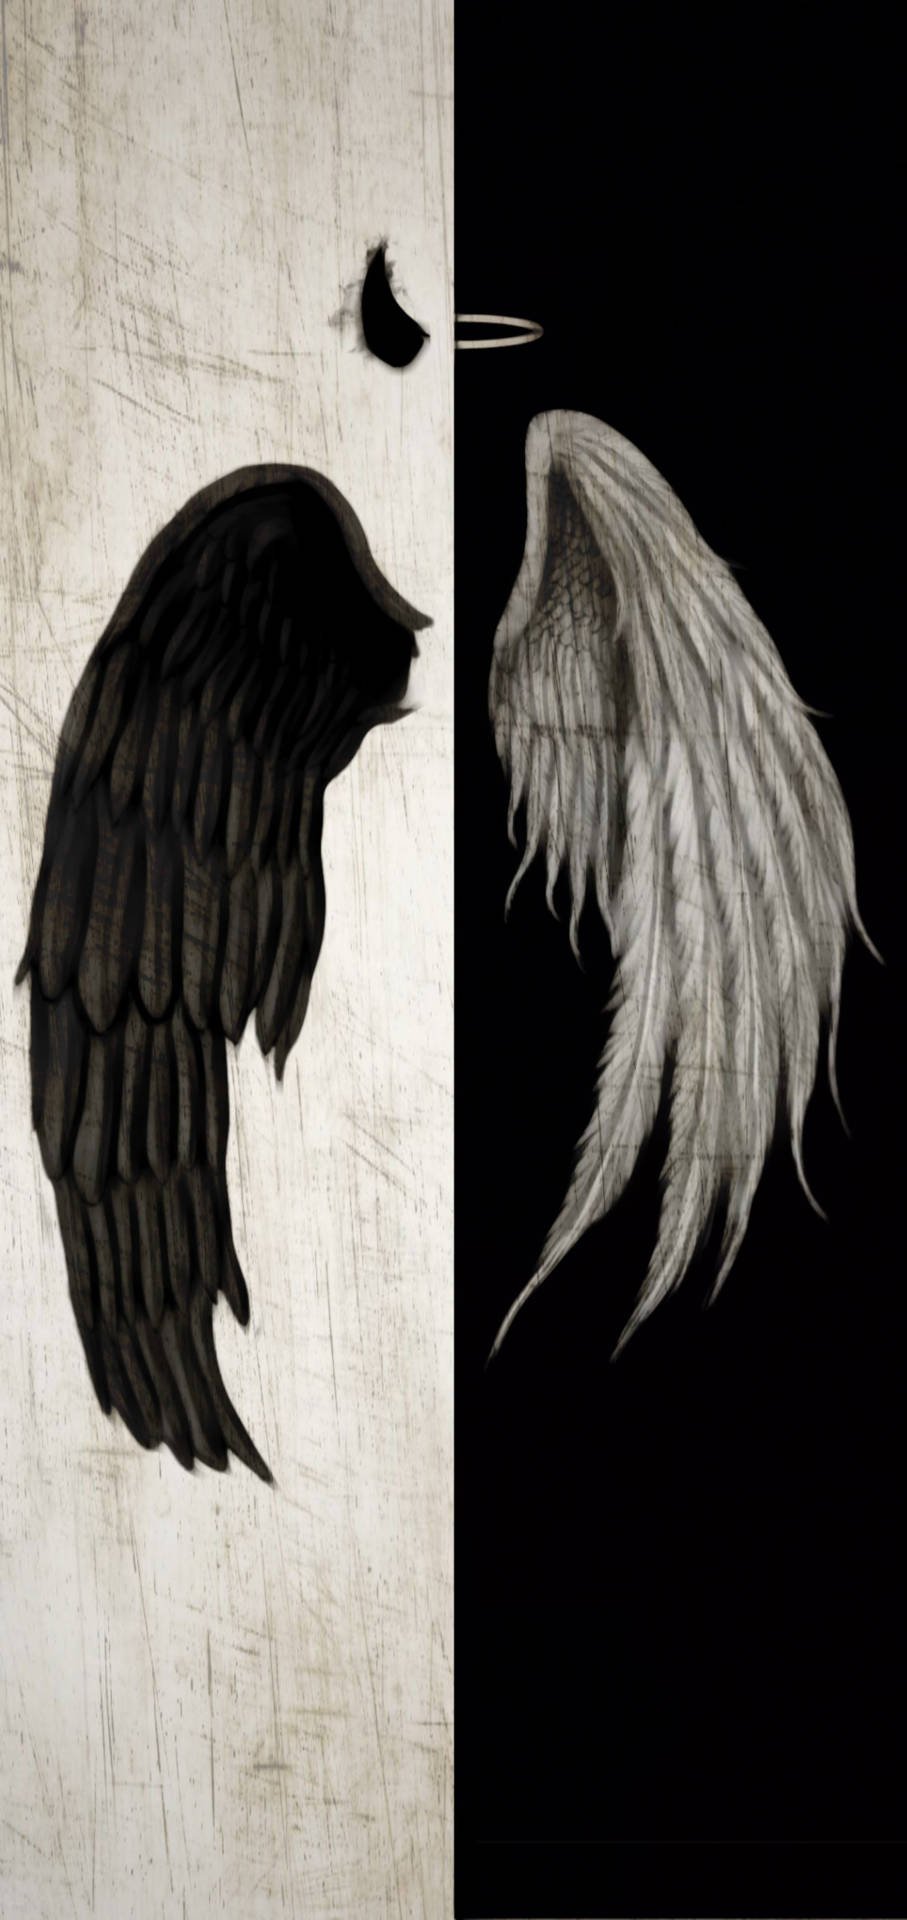 100+] Black Angel Wings Wallpapers | Wallpapers.com